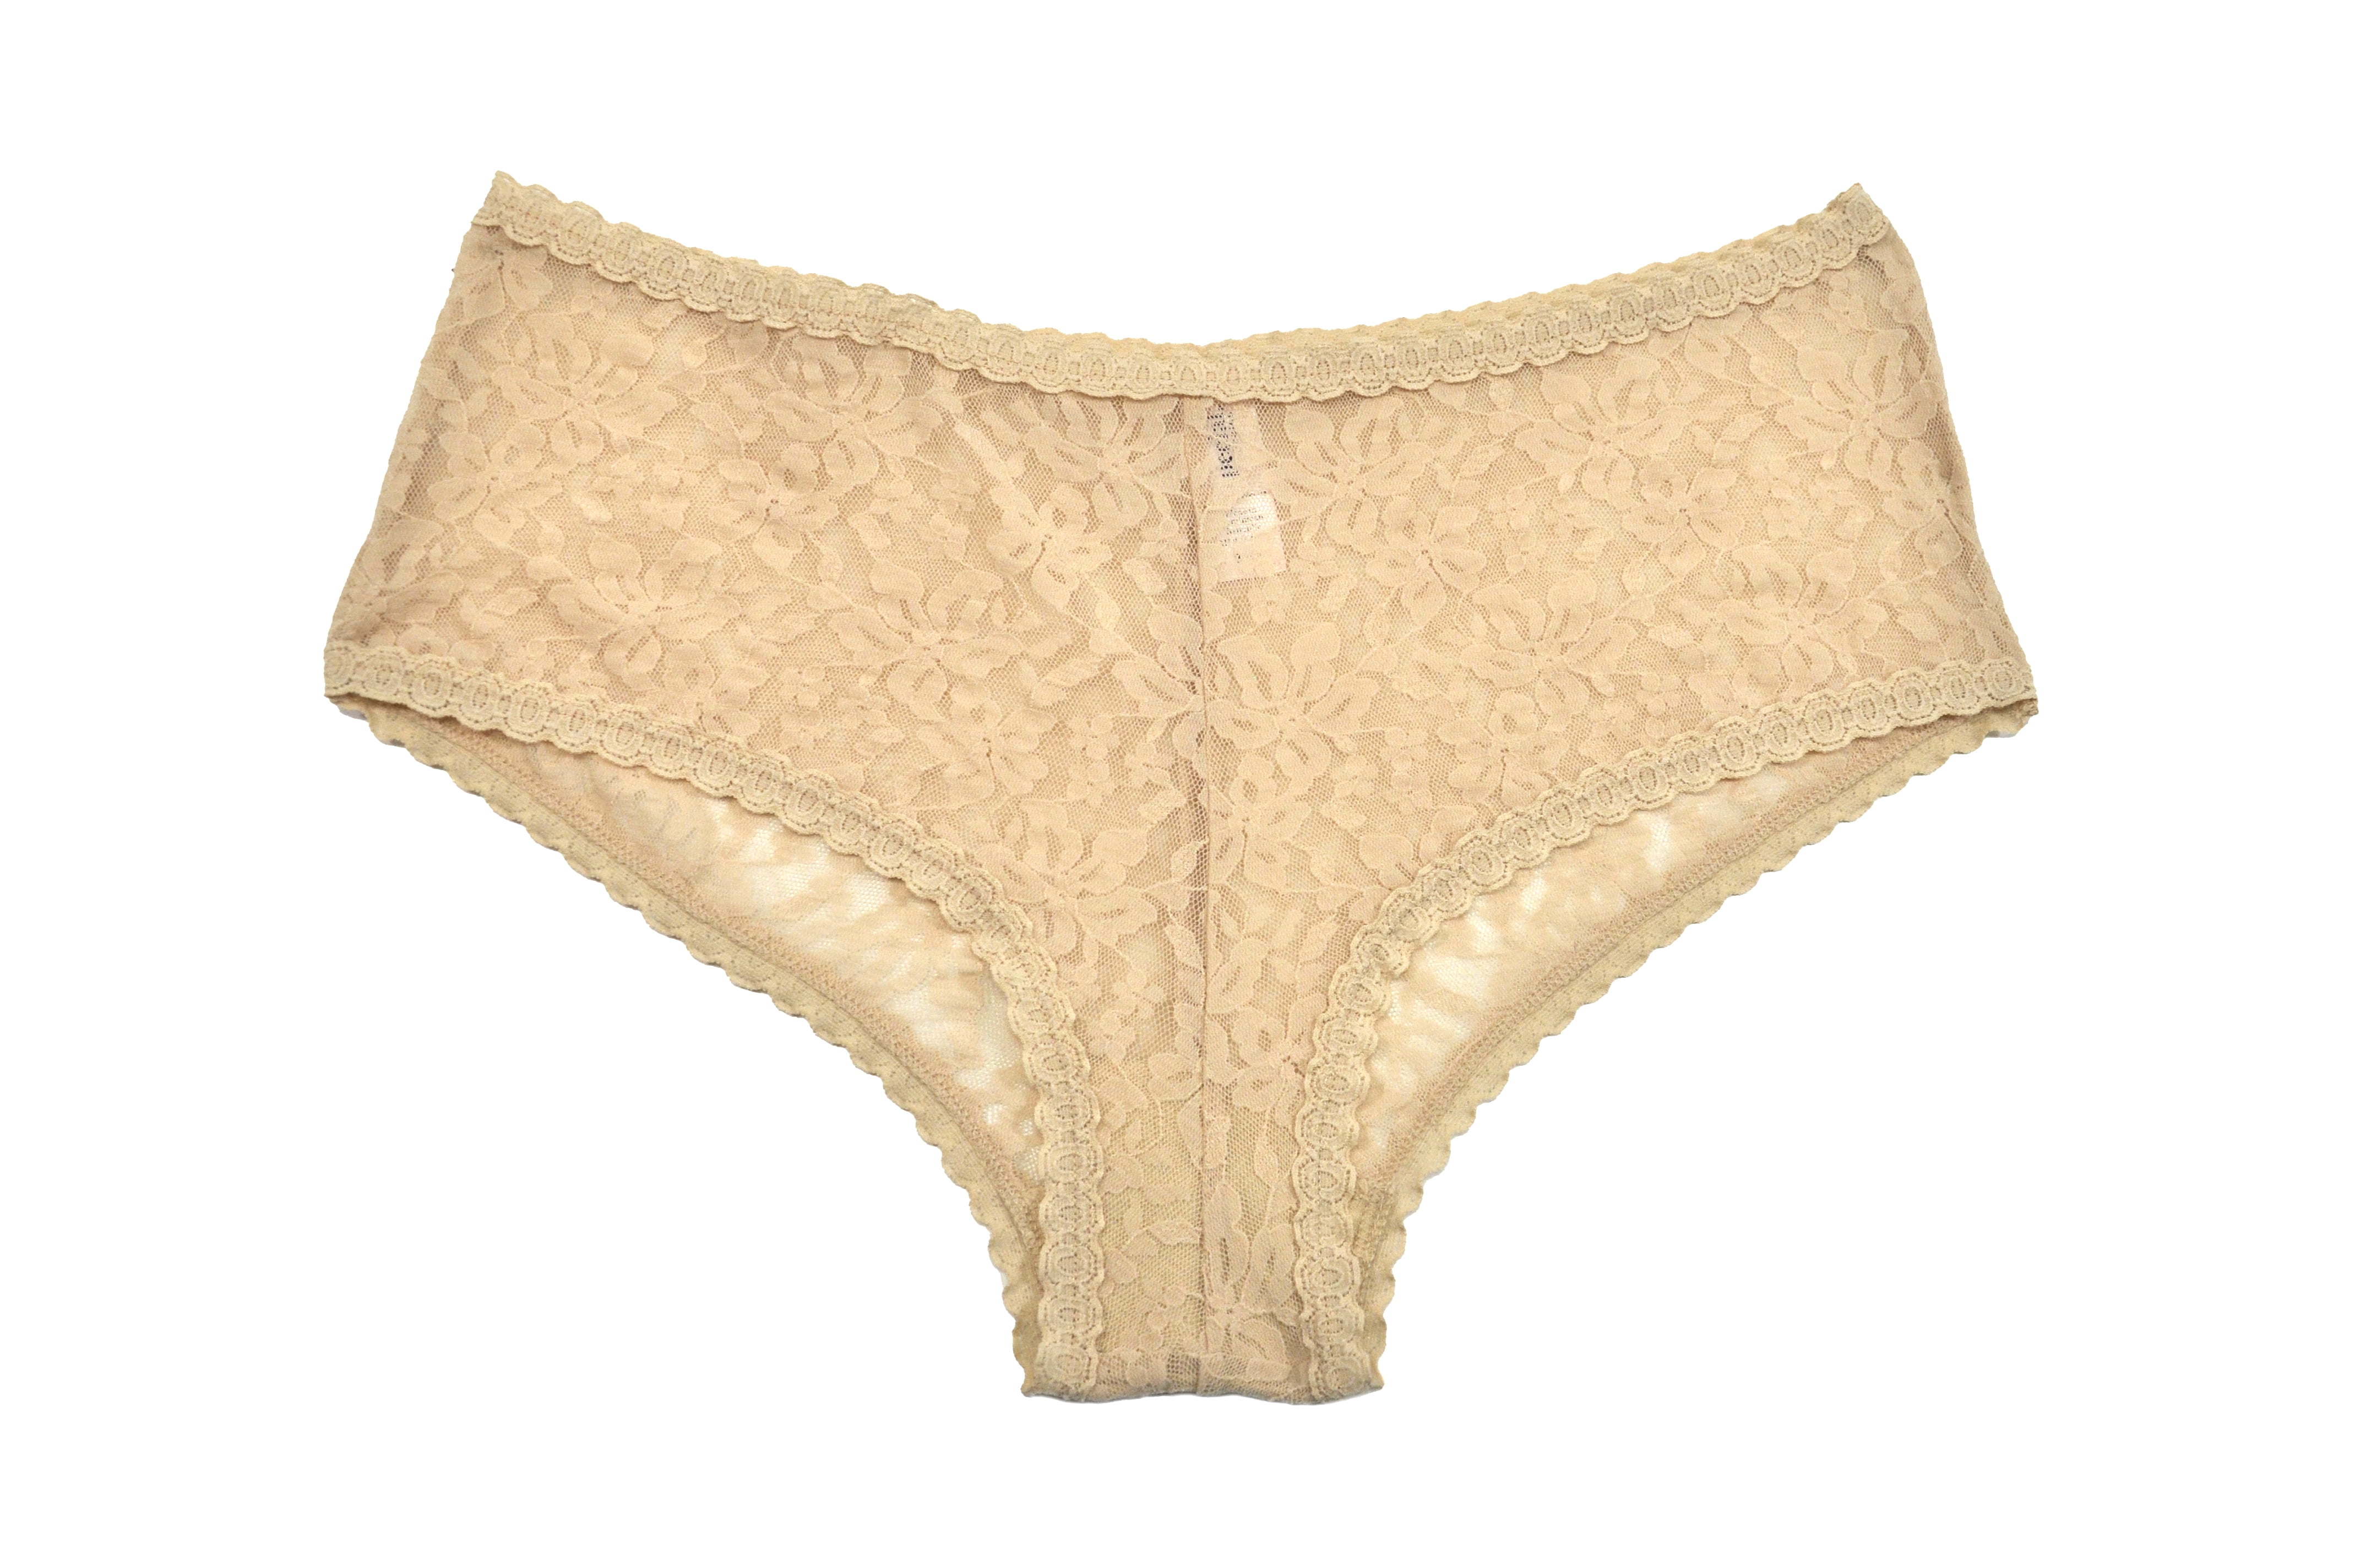 Women's Stretch Floral Lace Boyshort Underwear